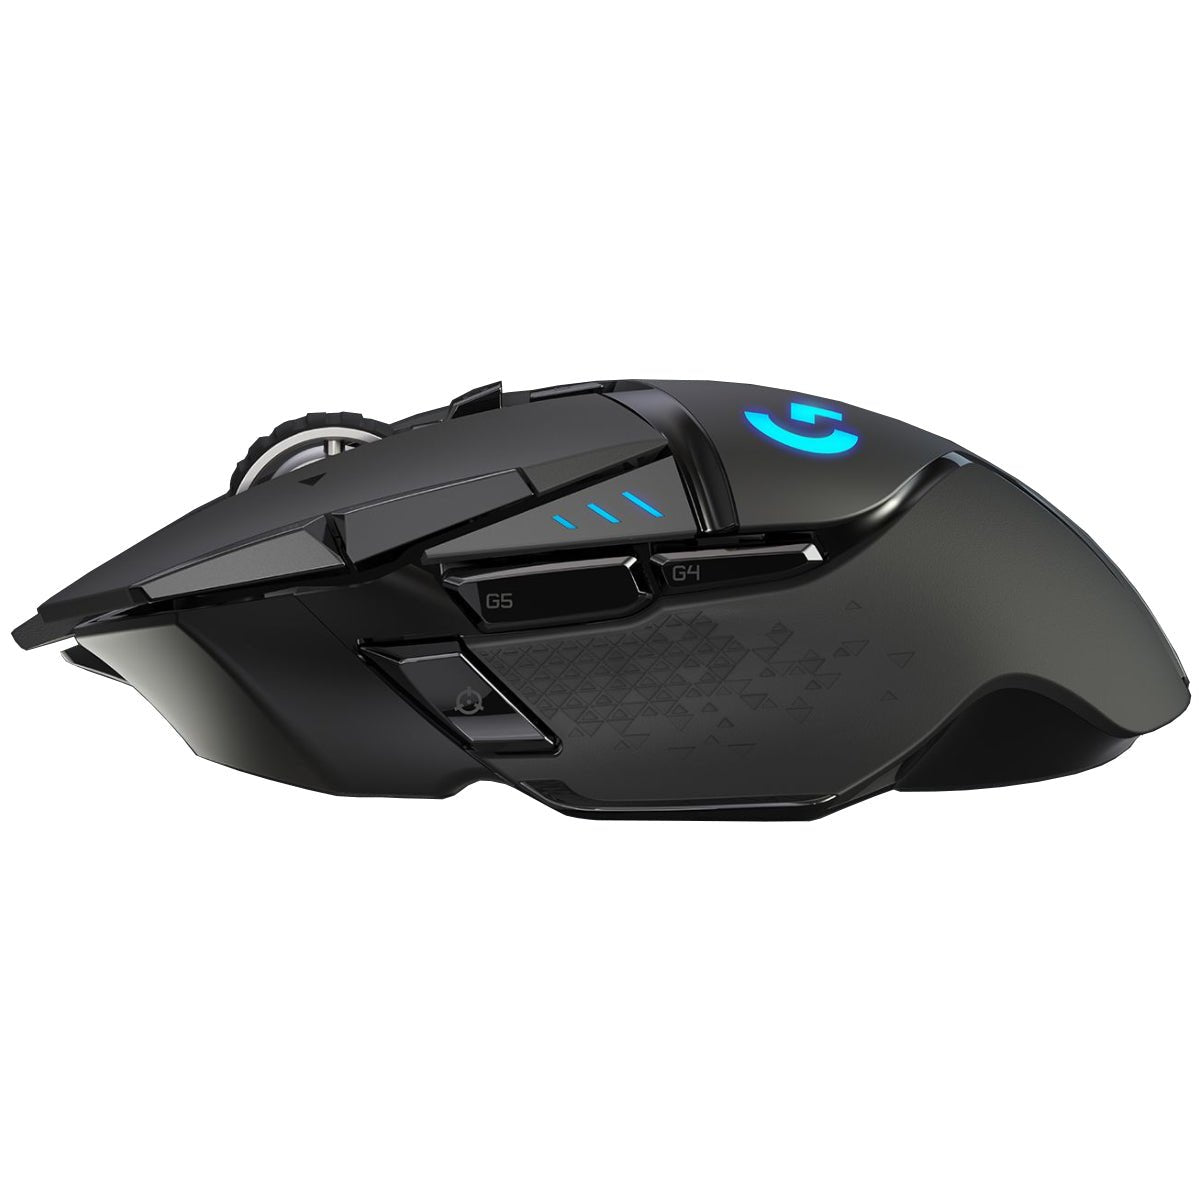 Logitech G502 LIGHTSPEED Wireless Gaming Mouse - Level UpLogitechPC5099206082106